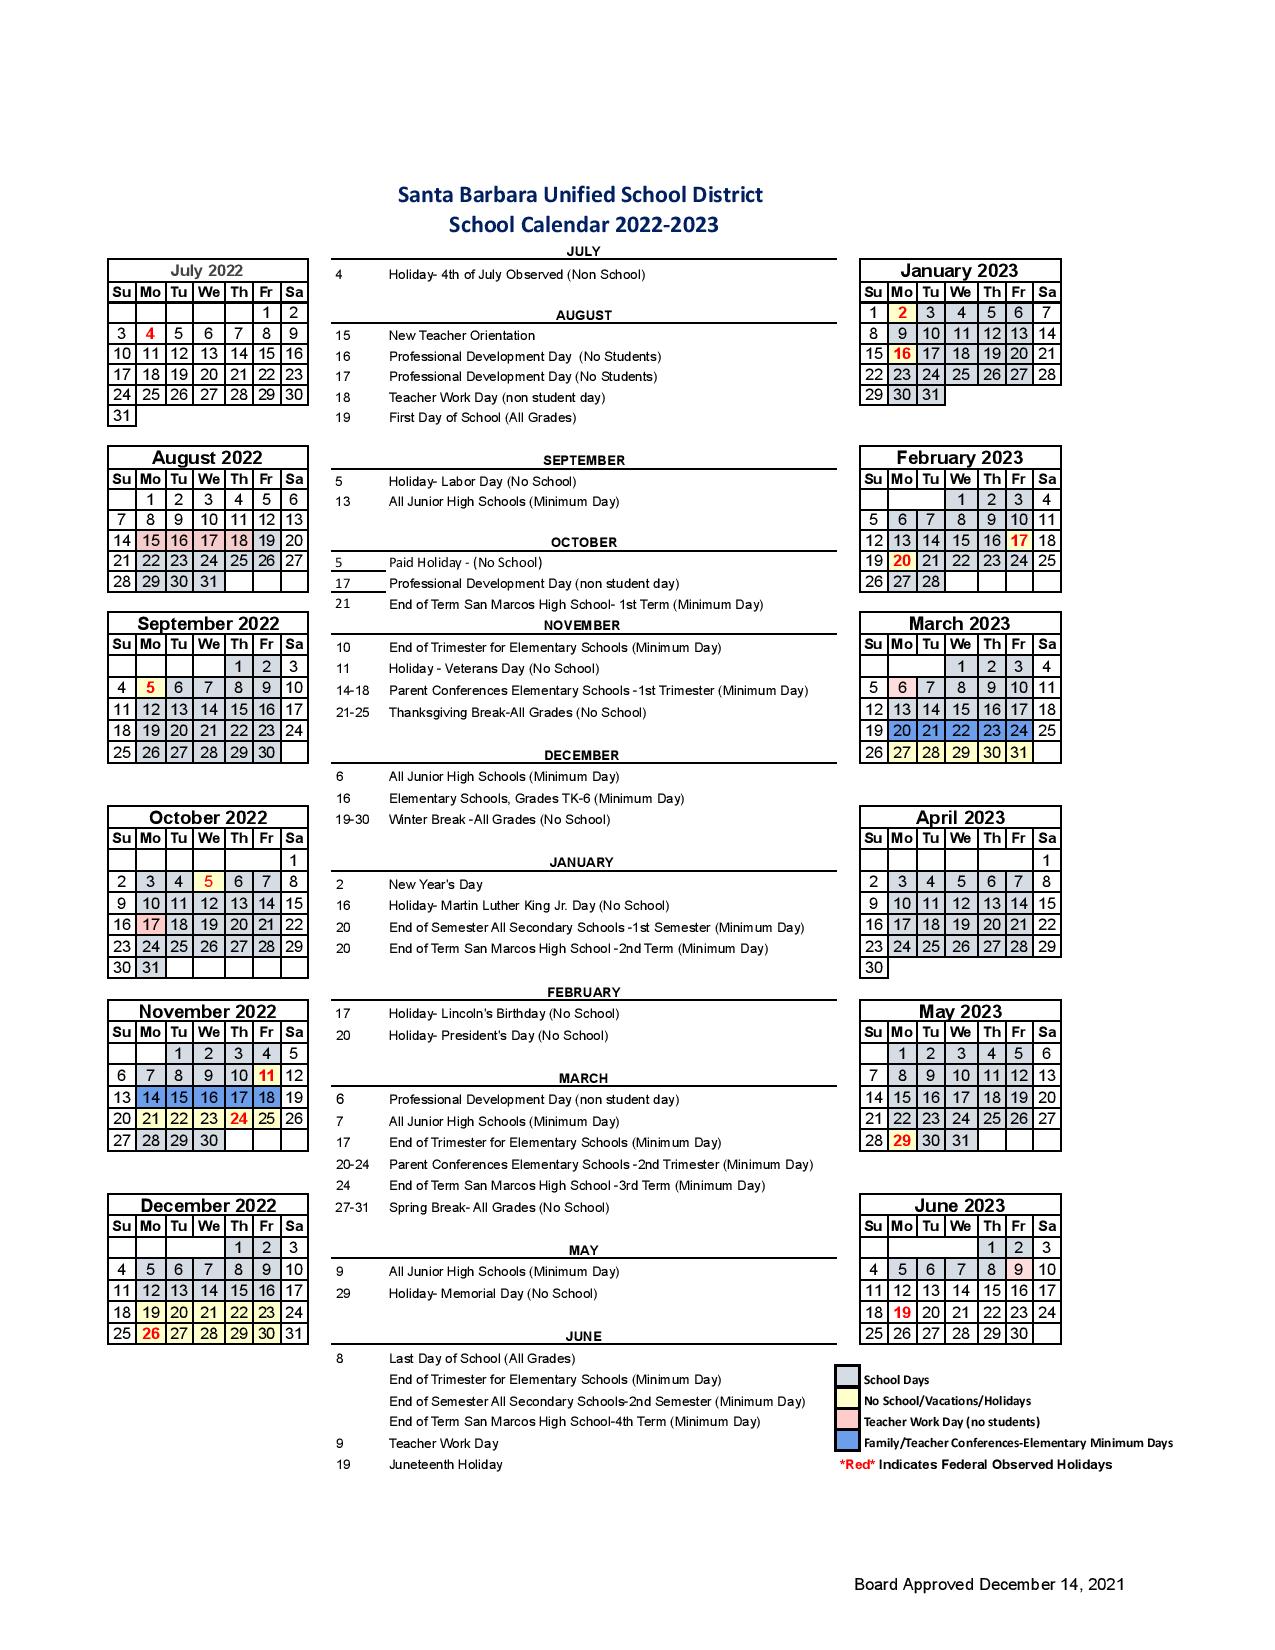 Santa Barbara Unified School District Calendar 20222023